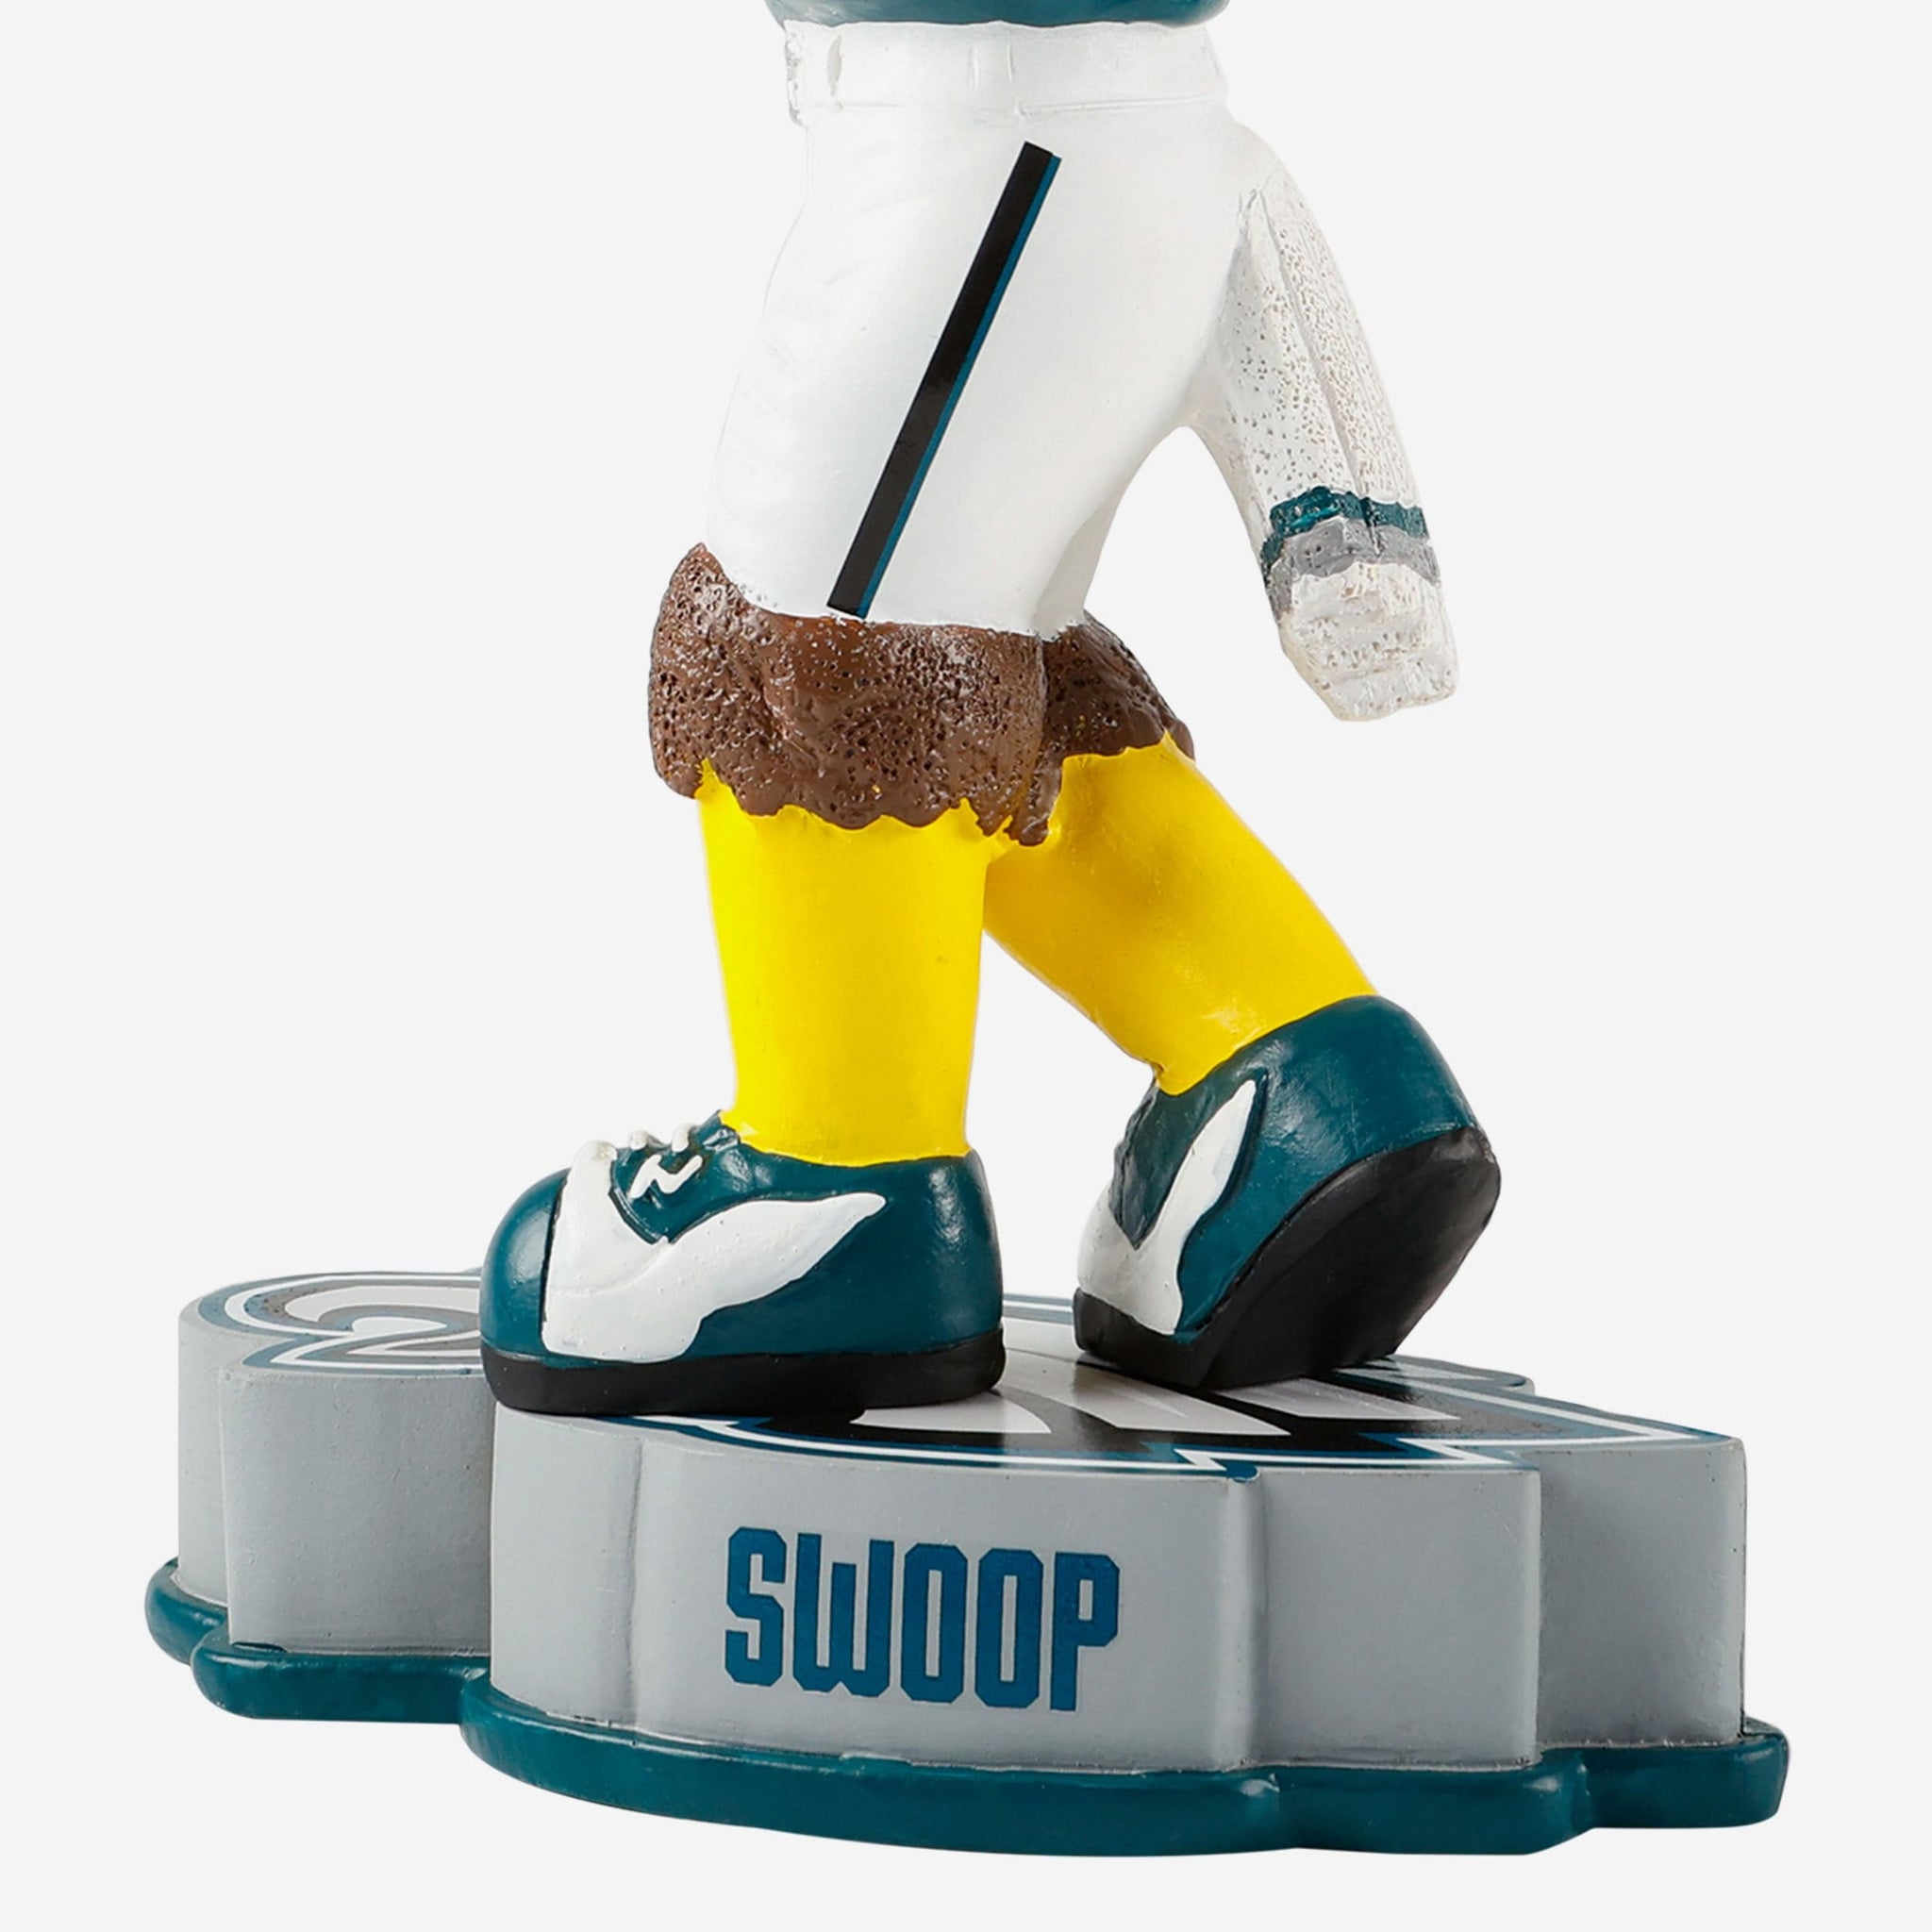 SWOOP Philadelphia Eagles Mascot Statue 12 Figurine 2022 Limited New* FOCO